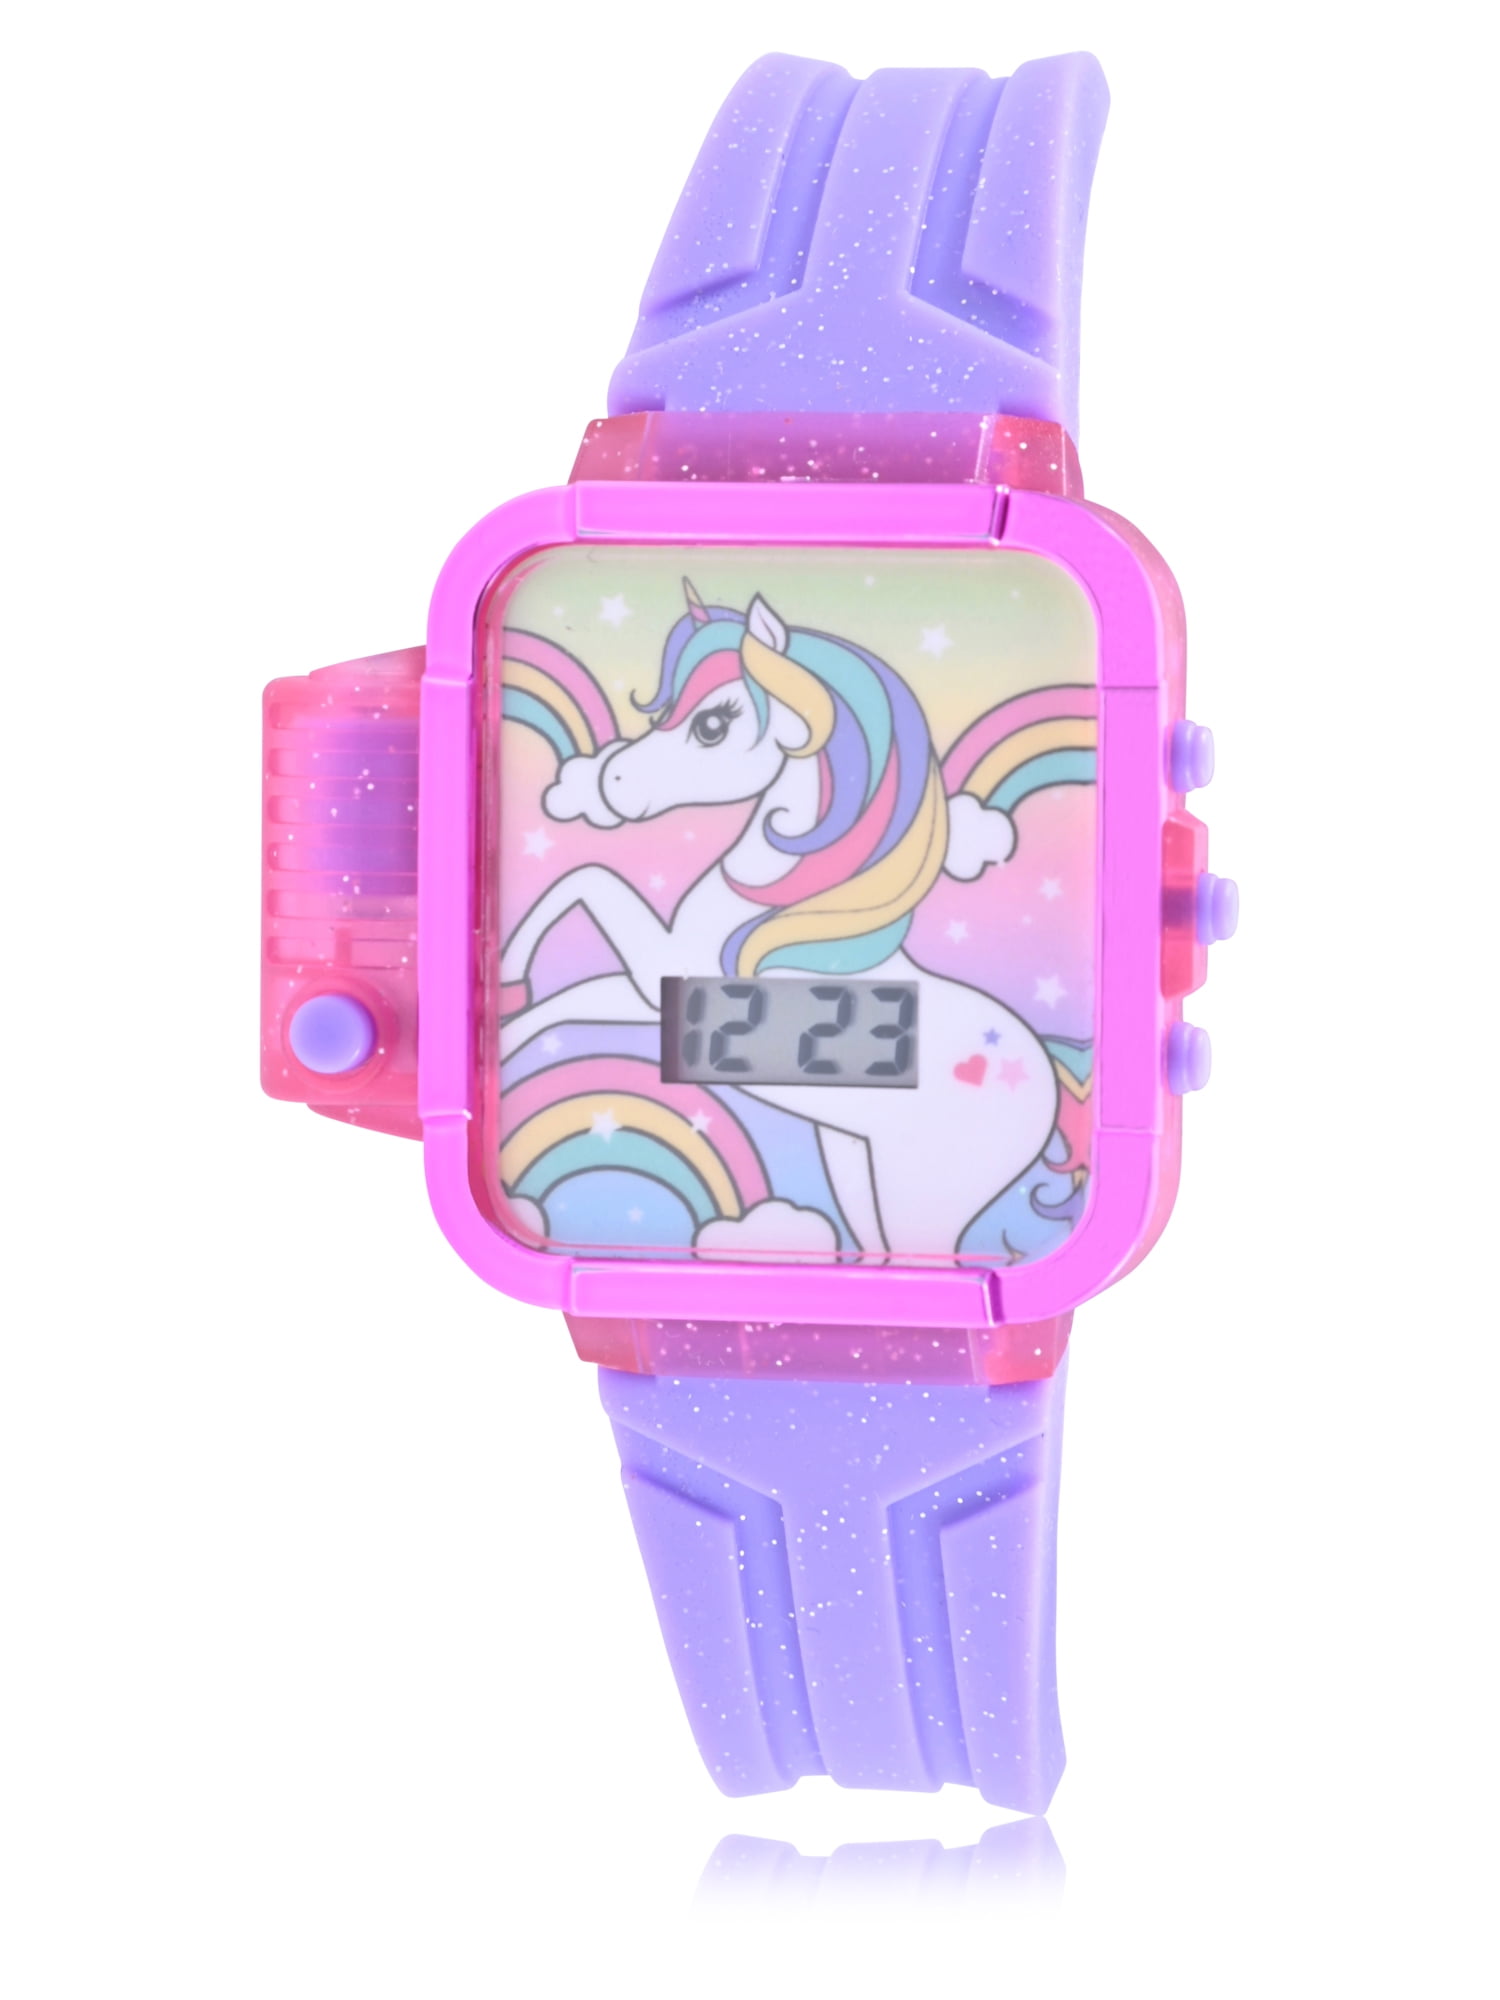 Wonder Nation "Unicorn" Kid's LCD Watch with Flashlight in Purple - WN4272WM